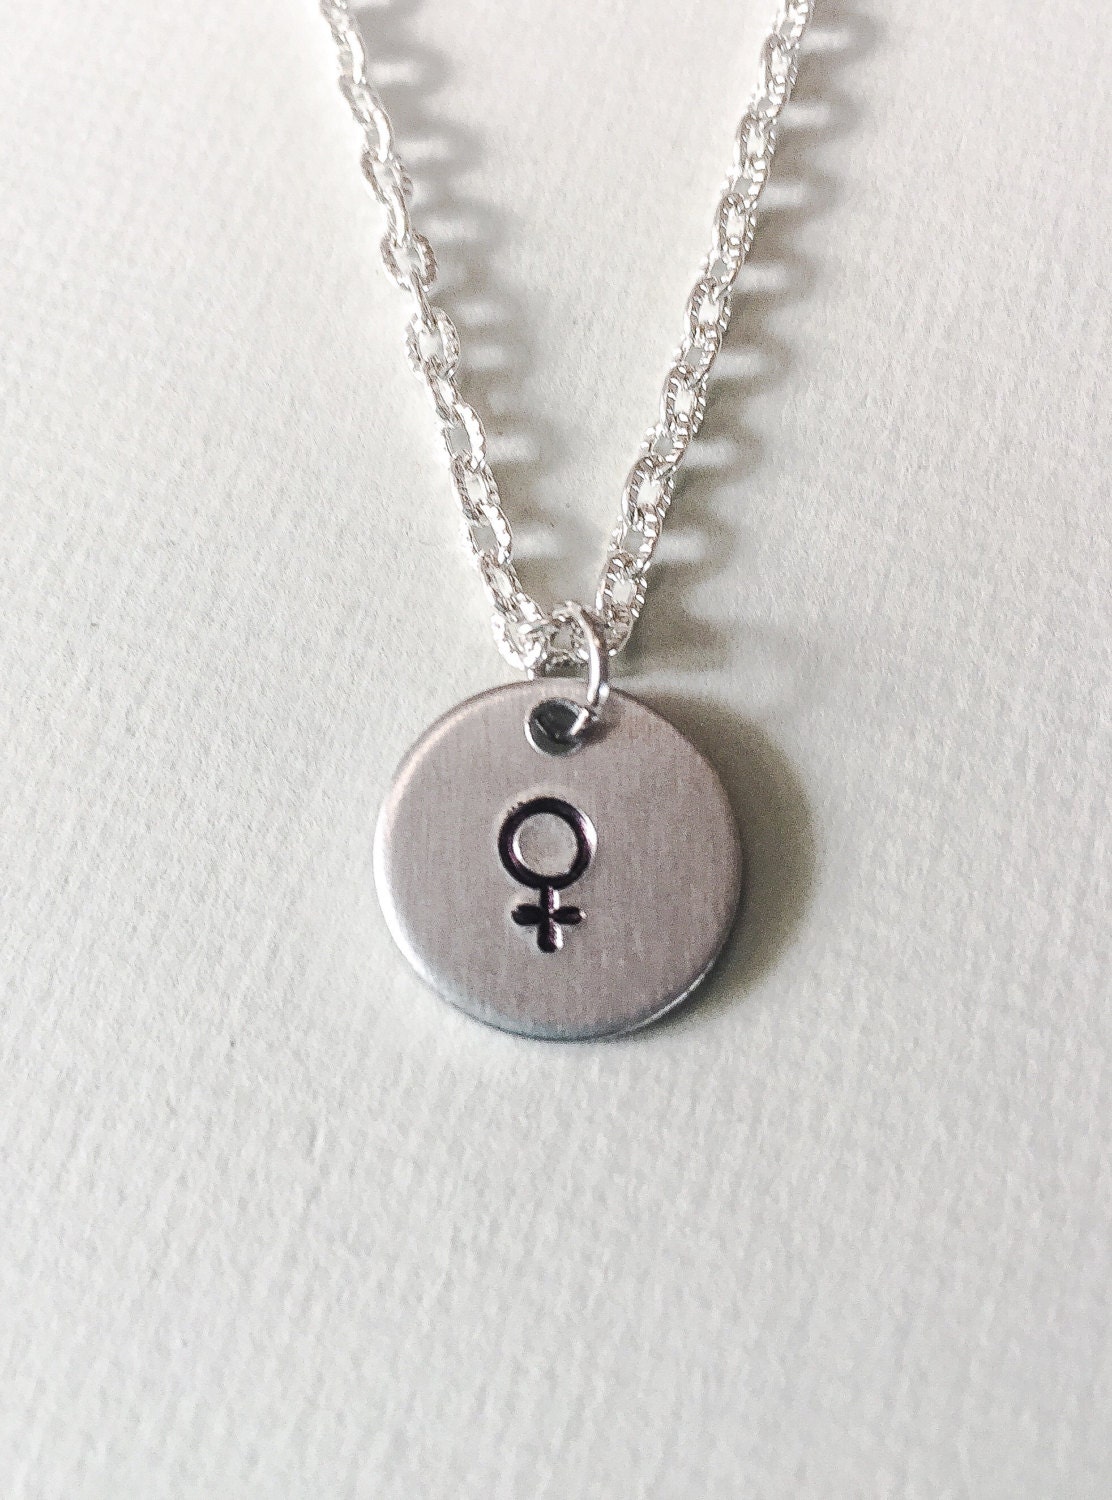 Female Symbol Necklace girl power feminist jewelry girl | Etsy